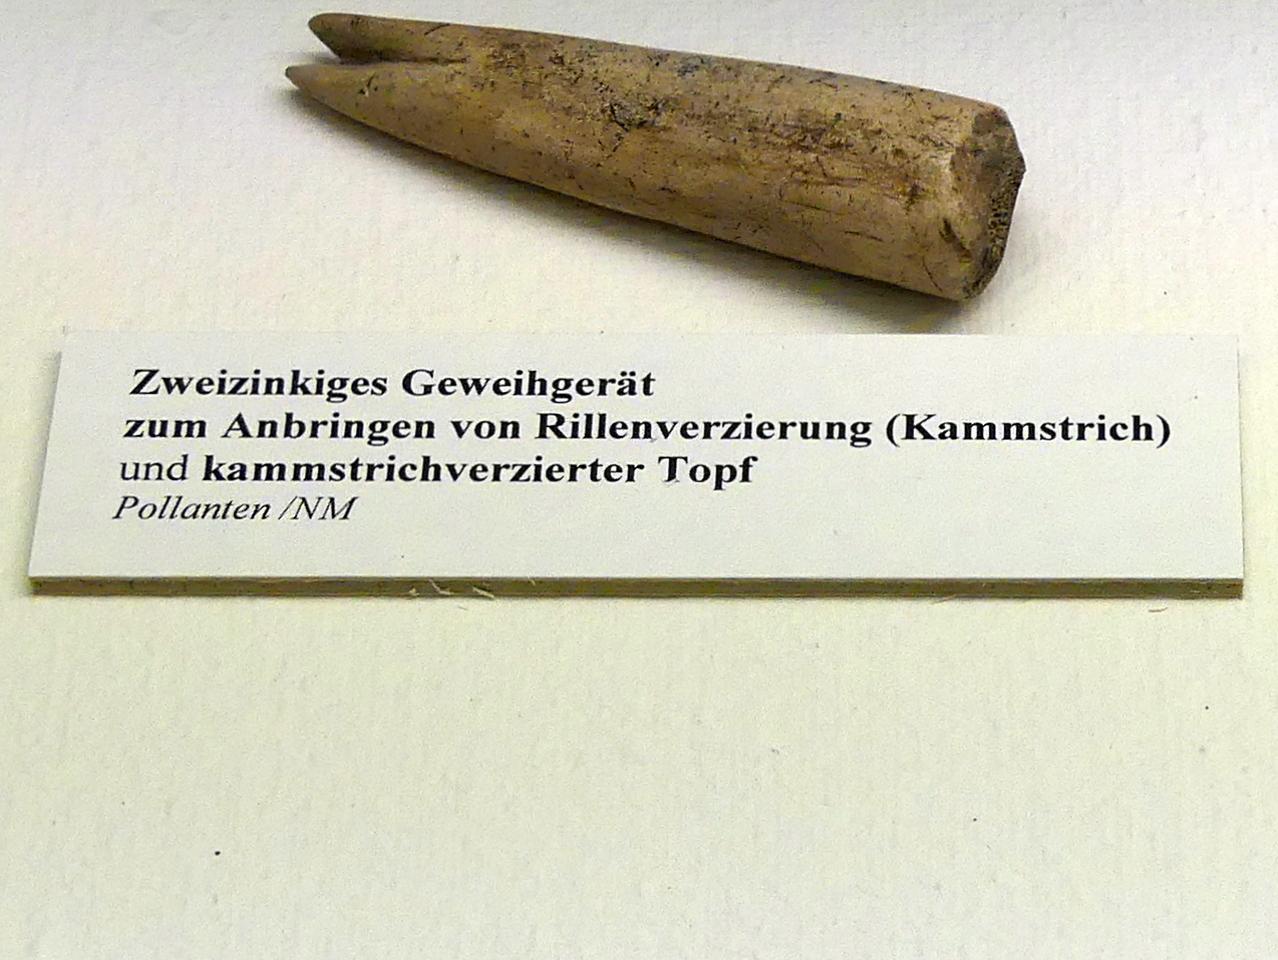 Kammstrichverzierter Topf, Spätlatènezeit D, 700 - 100 v. Chr., Bild 2/2